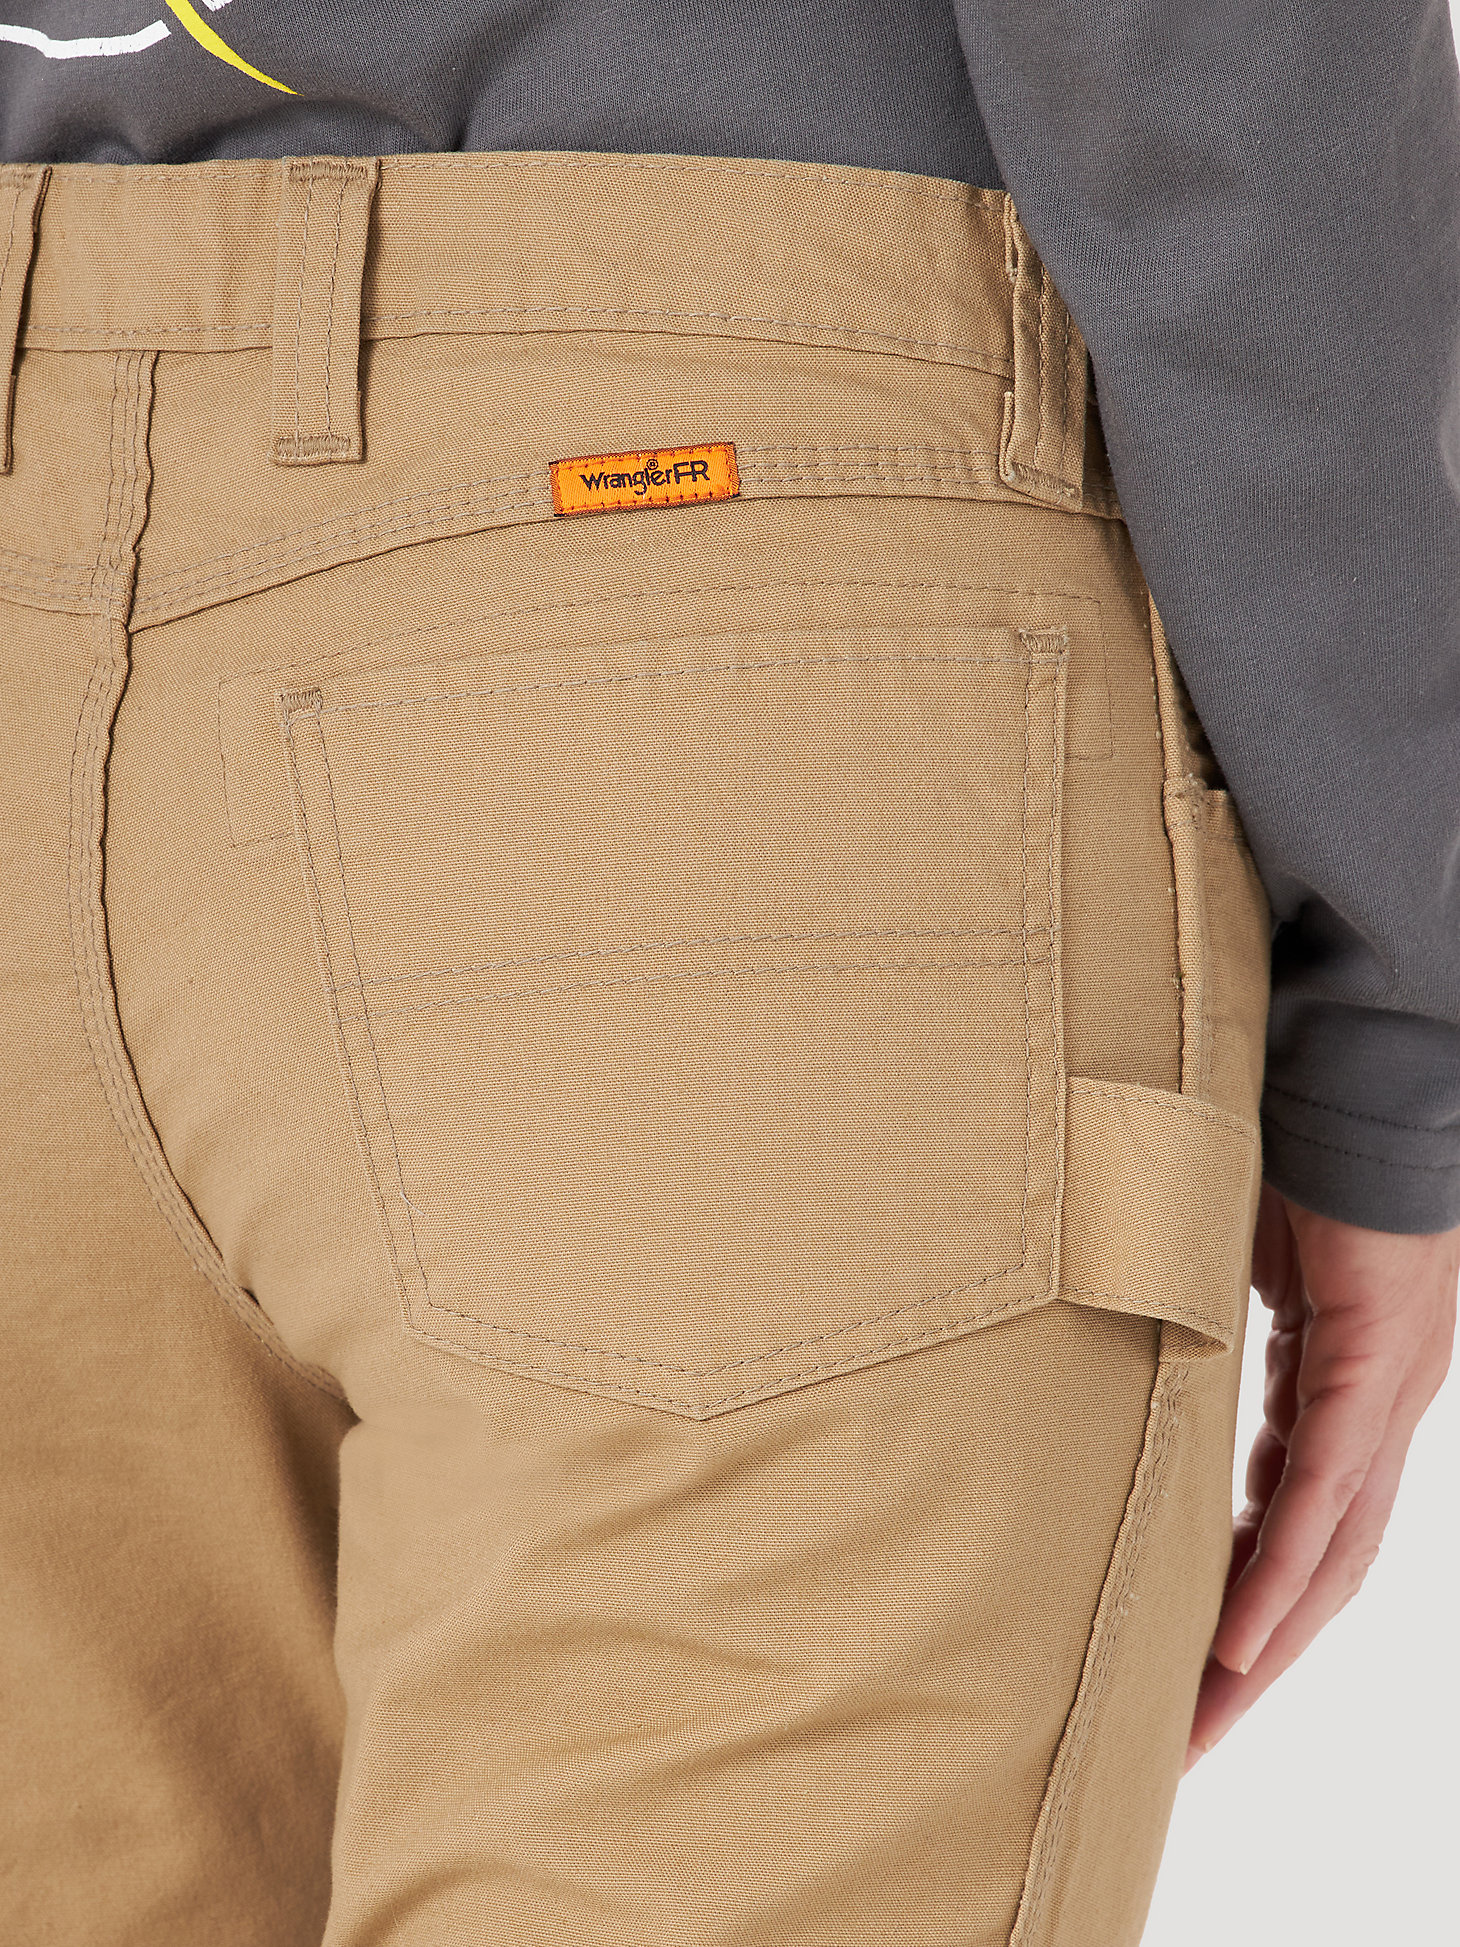 Women's Wrangler® FR Flame Resistant Utility Pant in Golden Khaki alternative view 4